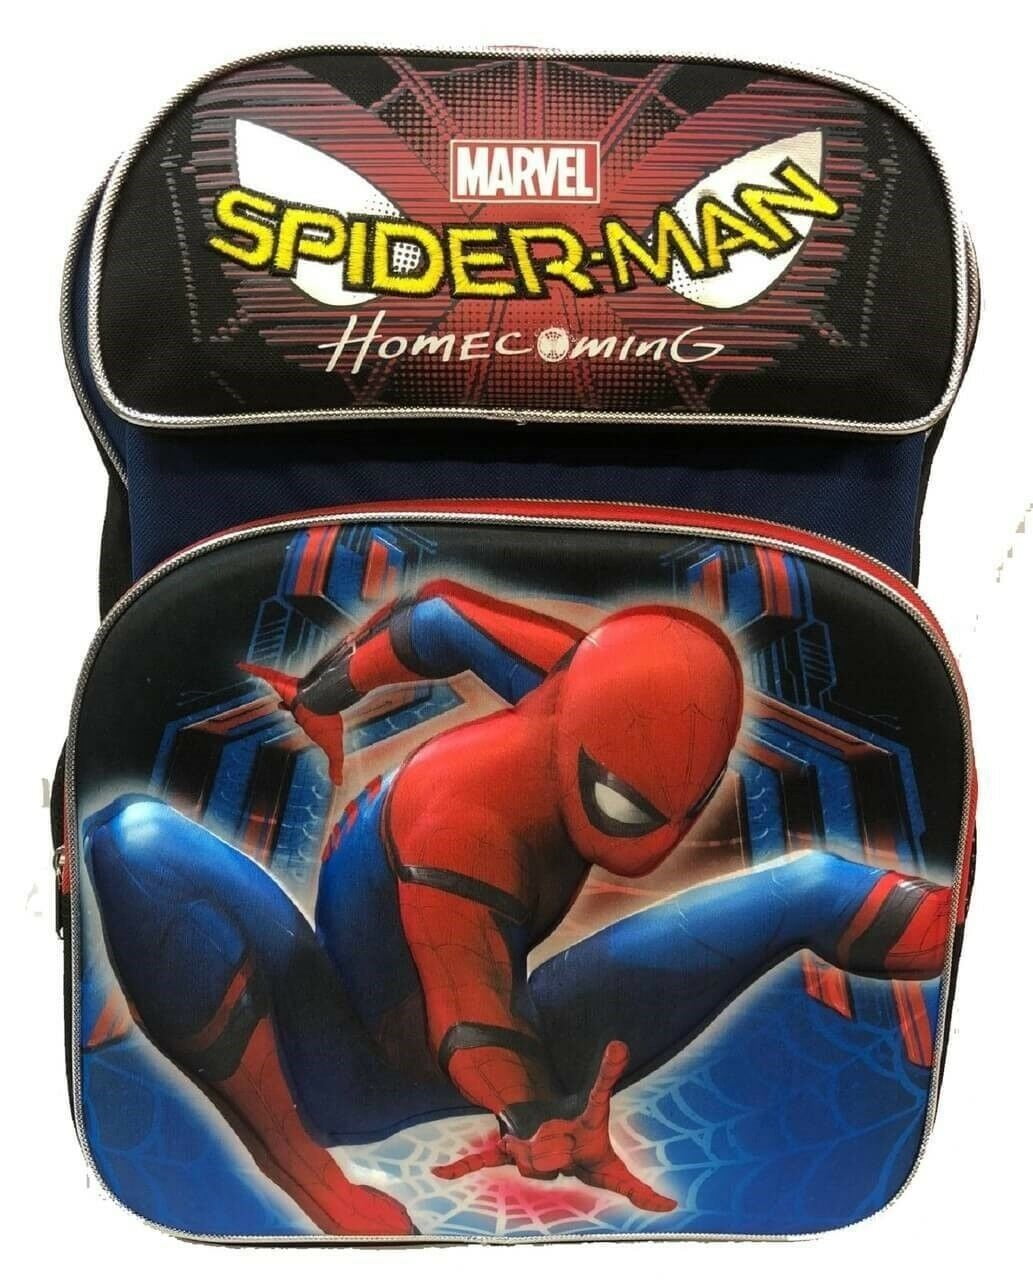 Spider-Man Backpacks Homecoming School Bags Satchel for Boys Kids Children Bag 